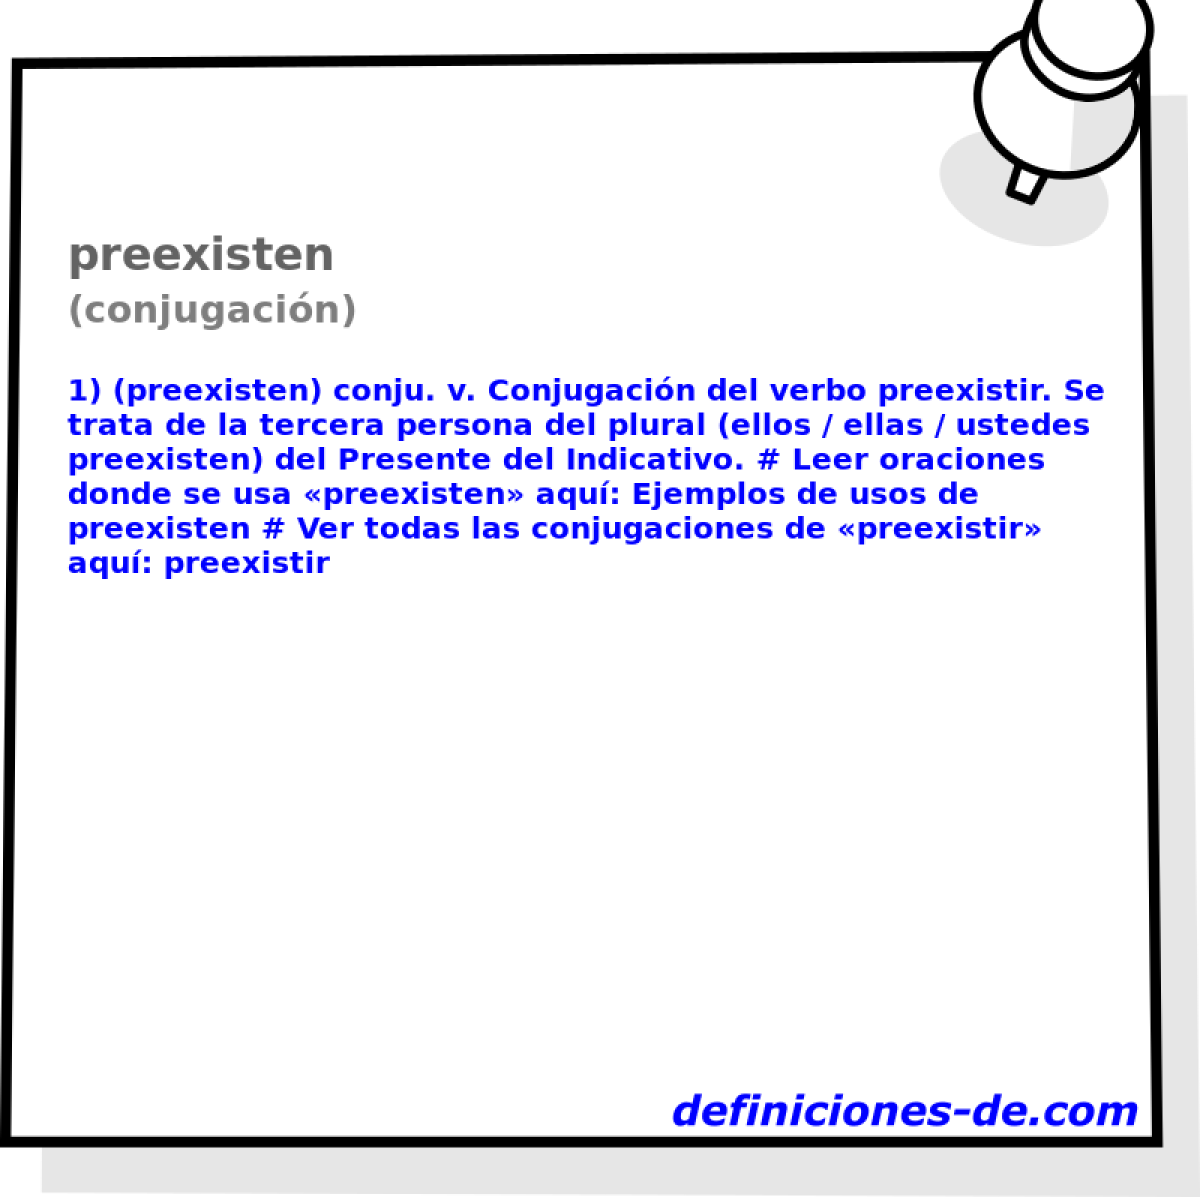 preexisten (conjugacin)